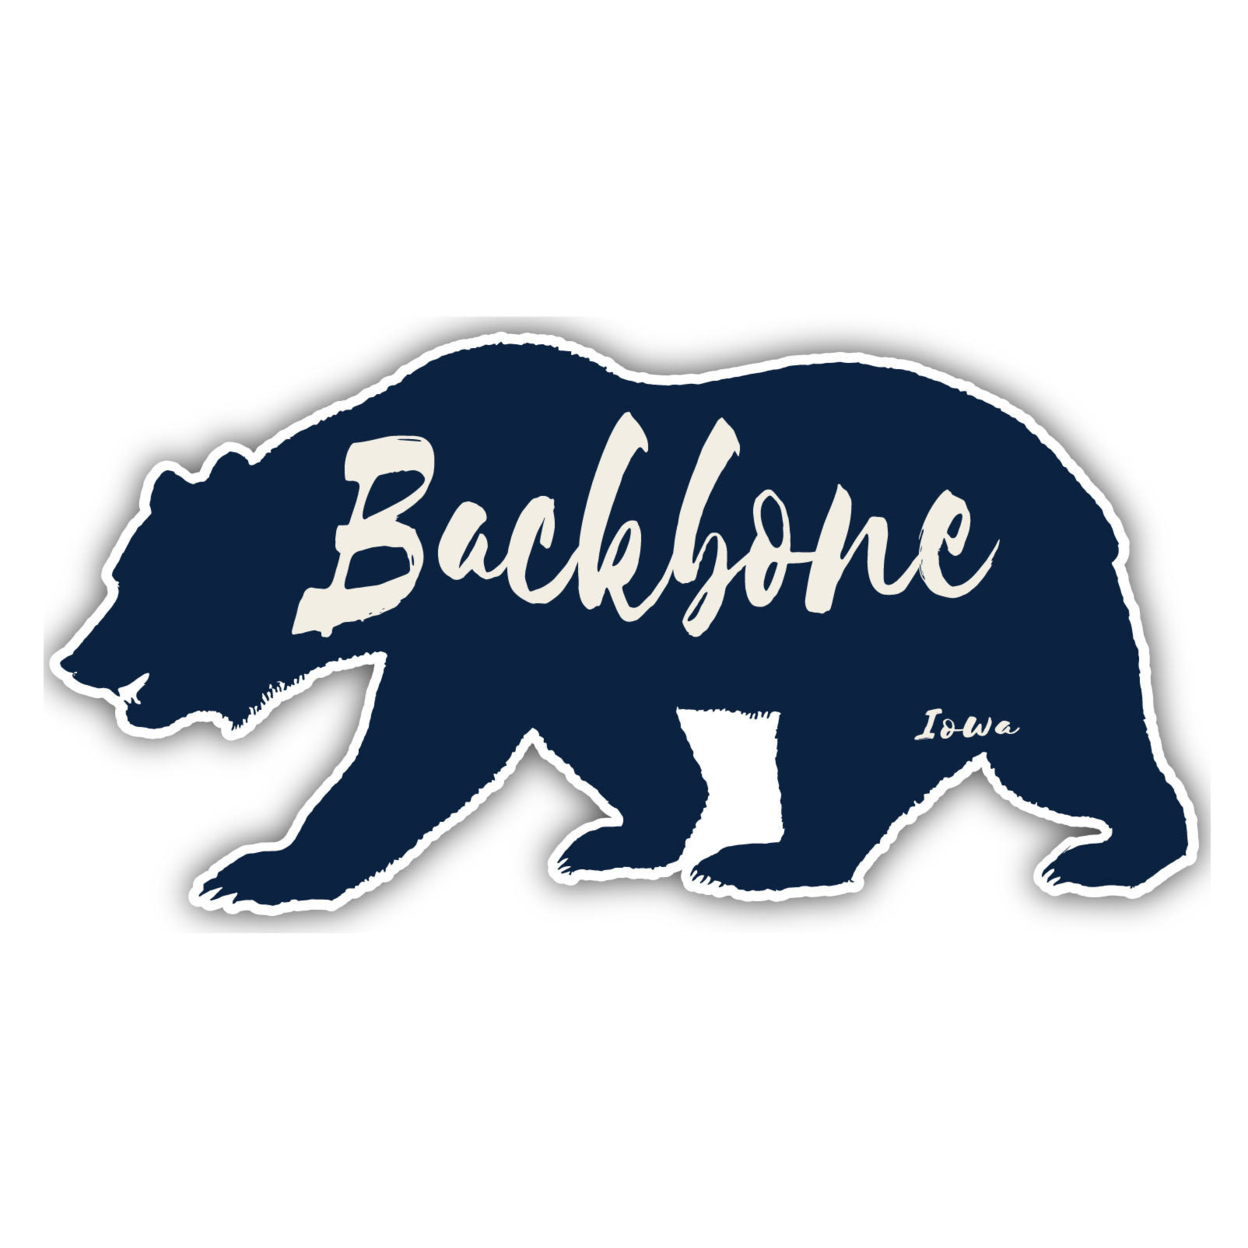 Backbone Iowa Souvenir Decorative Stickers (Choose Theme And Size) - Single Unit, 8-Inch, Bear